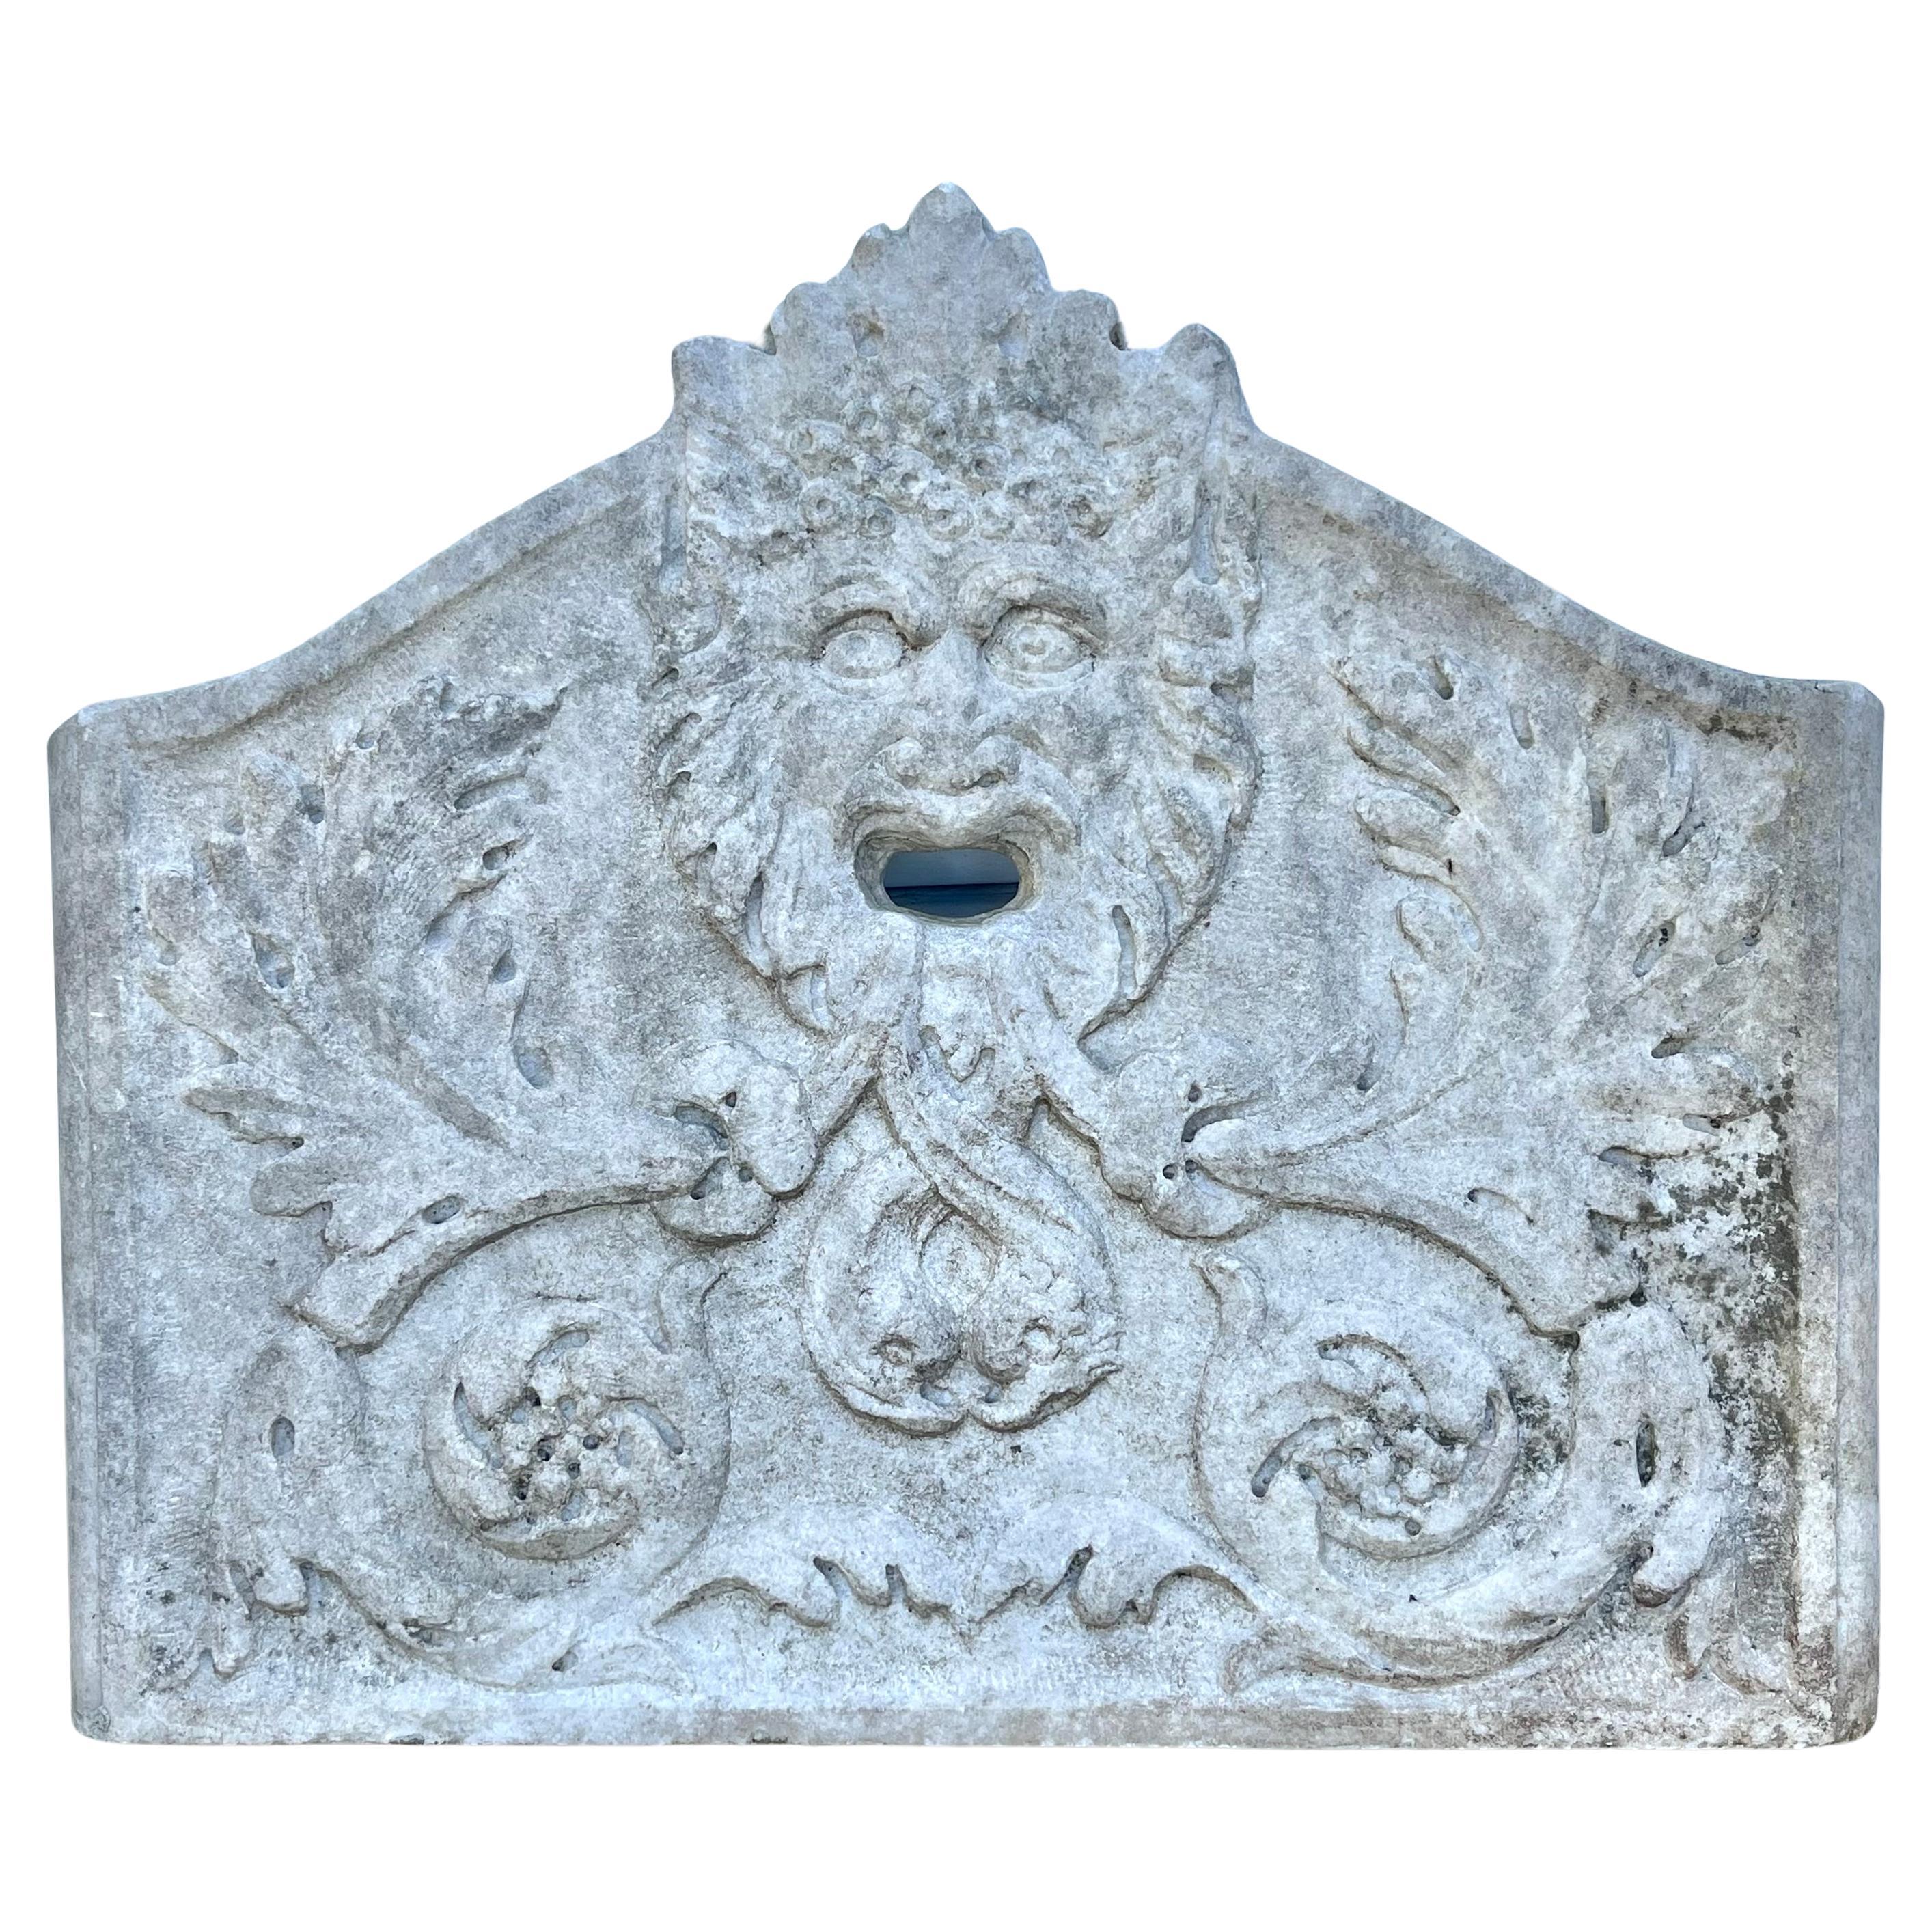 Marmorbrunnenplakette aus Astors Ferncliff